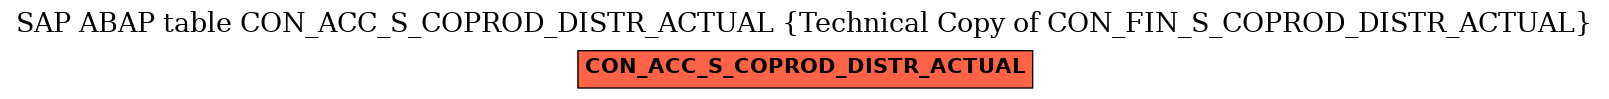 E-R Diagram for table CON_ACC_S_COPROD_DISTR_ACTUAL (Technical Copy of CON_FIN_S_COPROD_DISTR_ACTUAL)